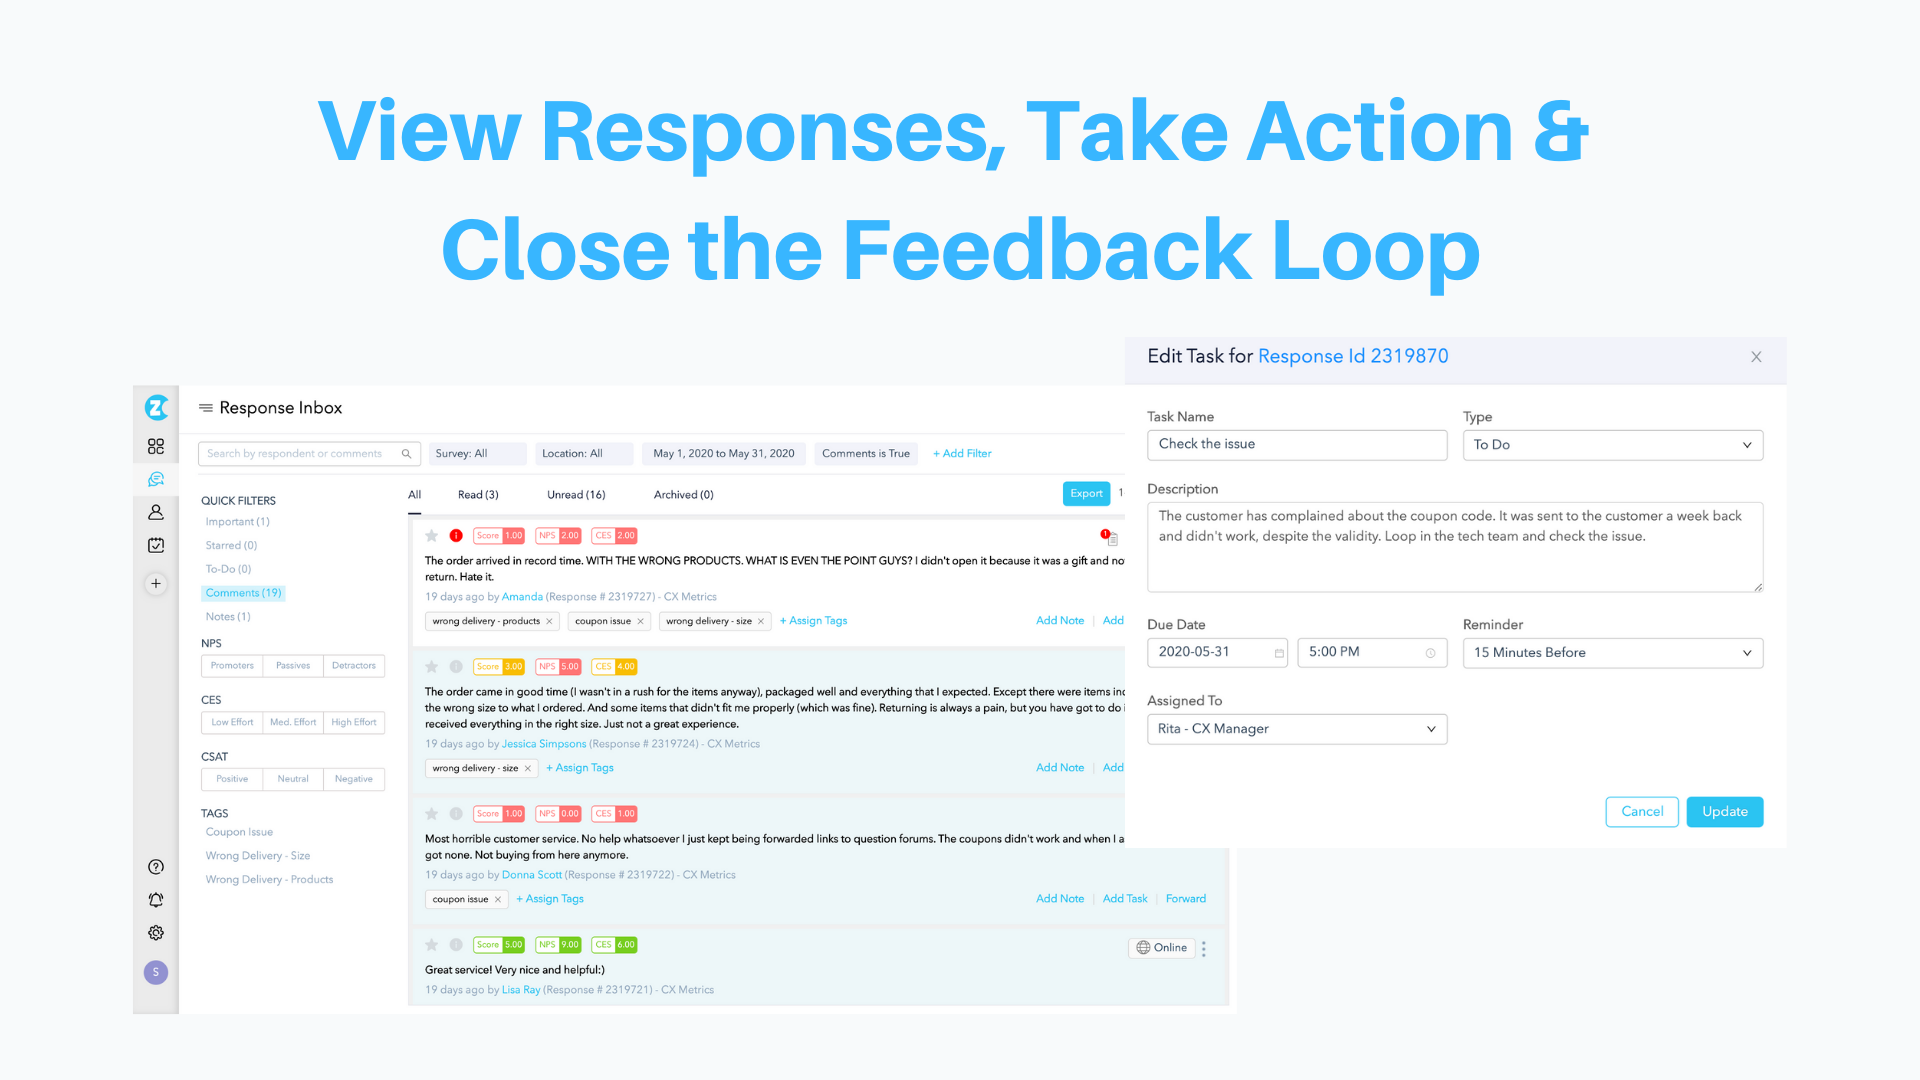 Zonka Feedback Software - Take Action & Close the Feedback Loop